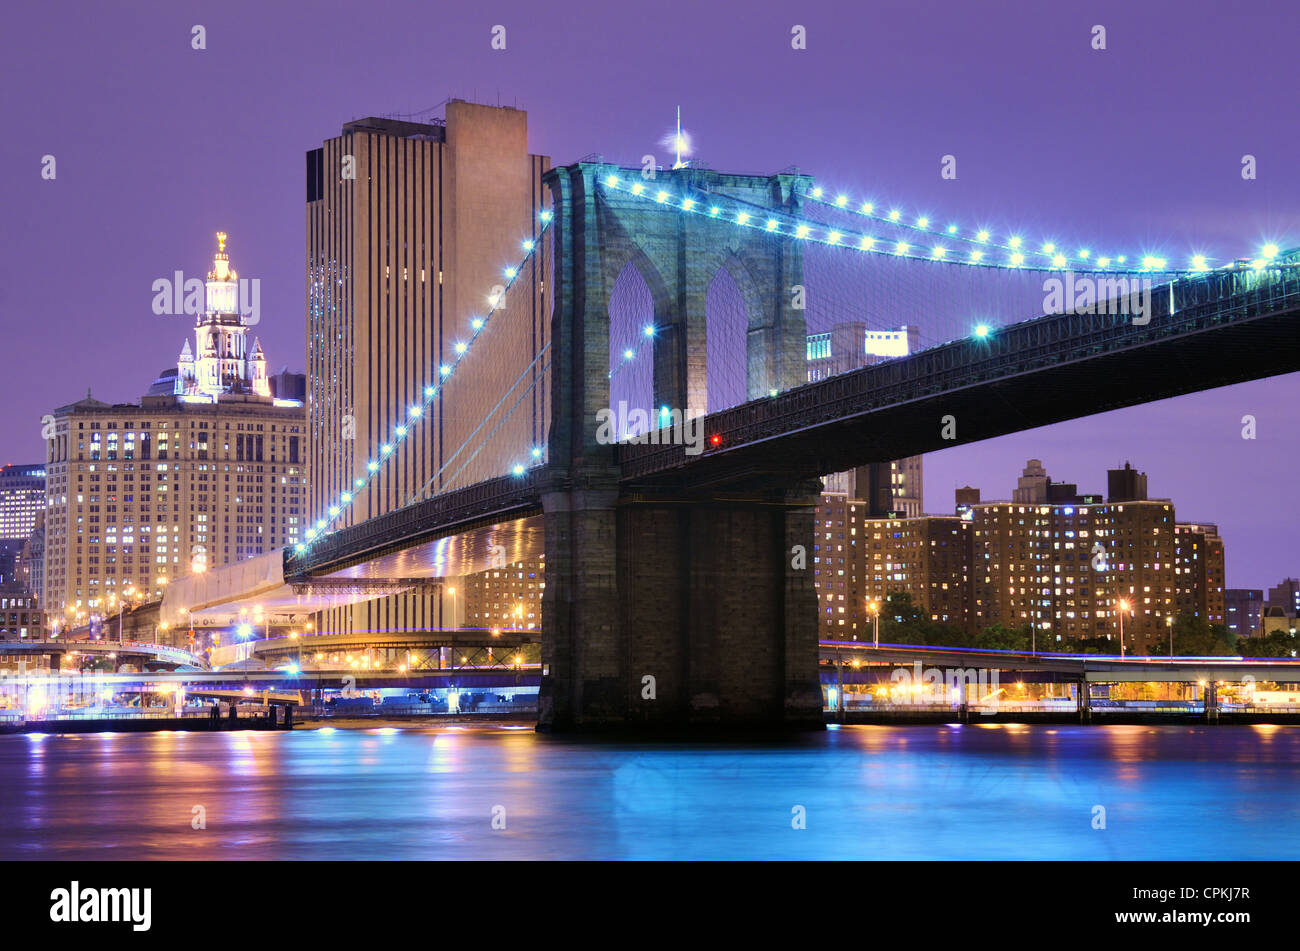 Le célèbre pont de Brooklyn enjambant la rivière de l'Est de Manhattan à New York City. Banque D'Images